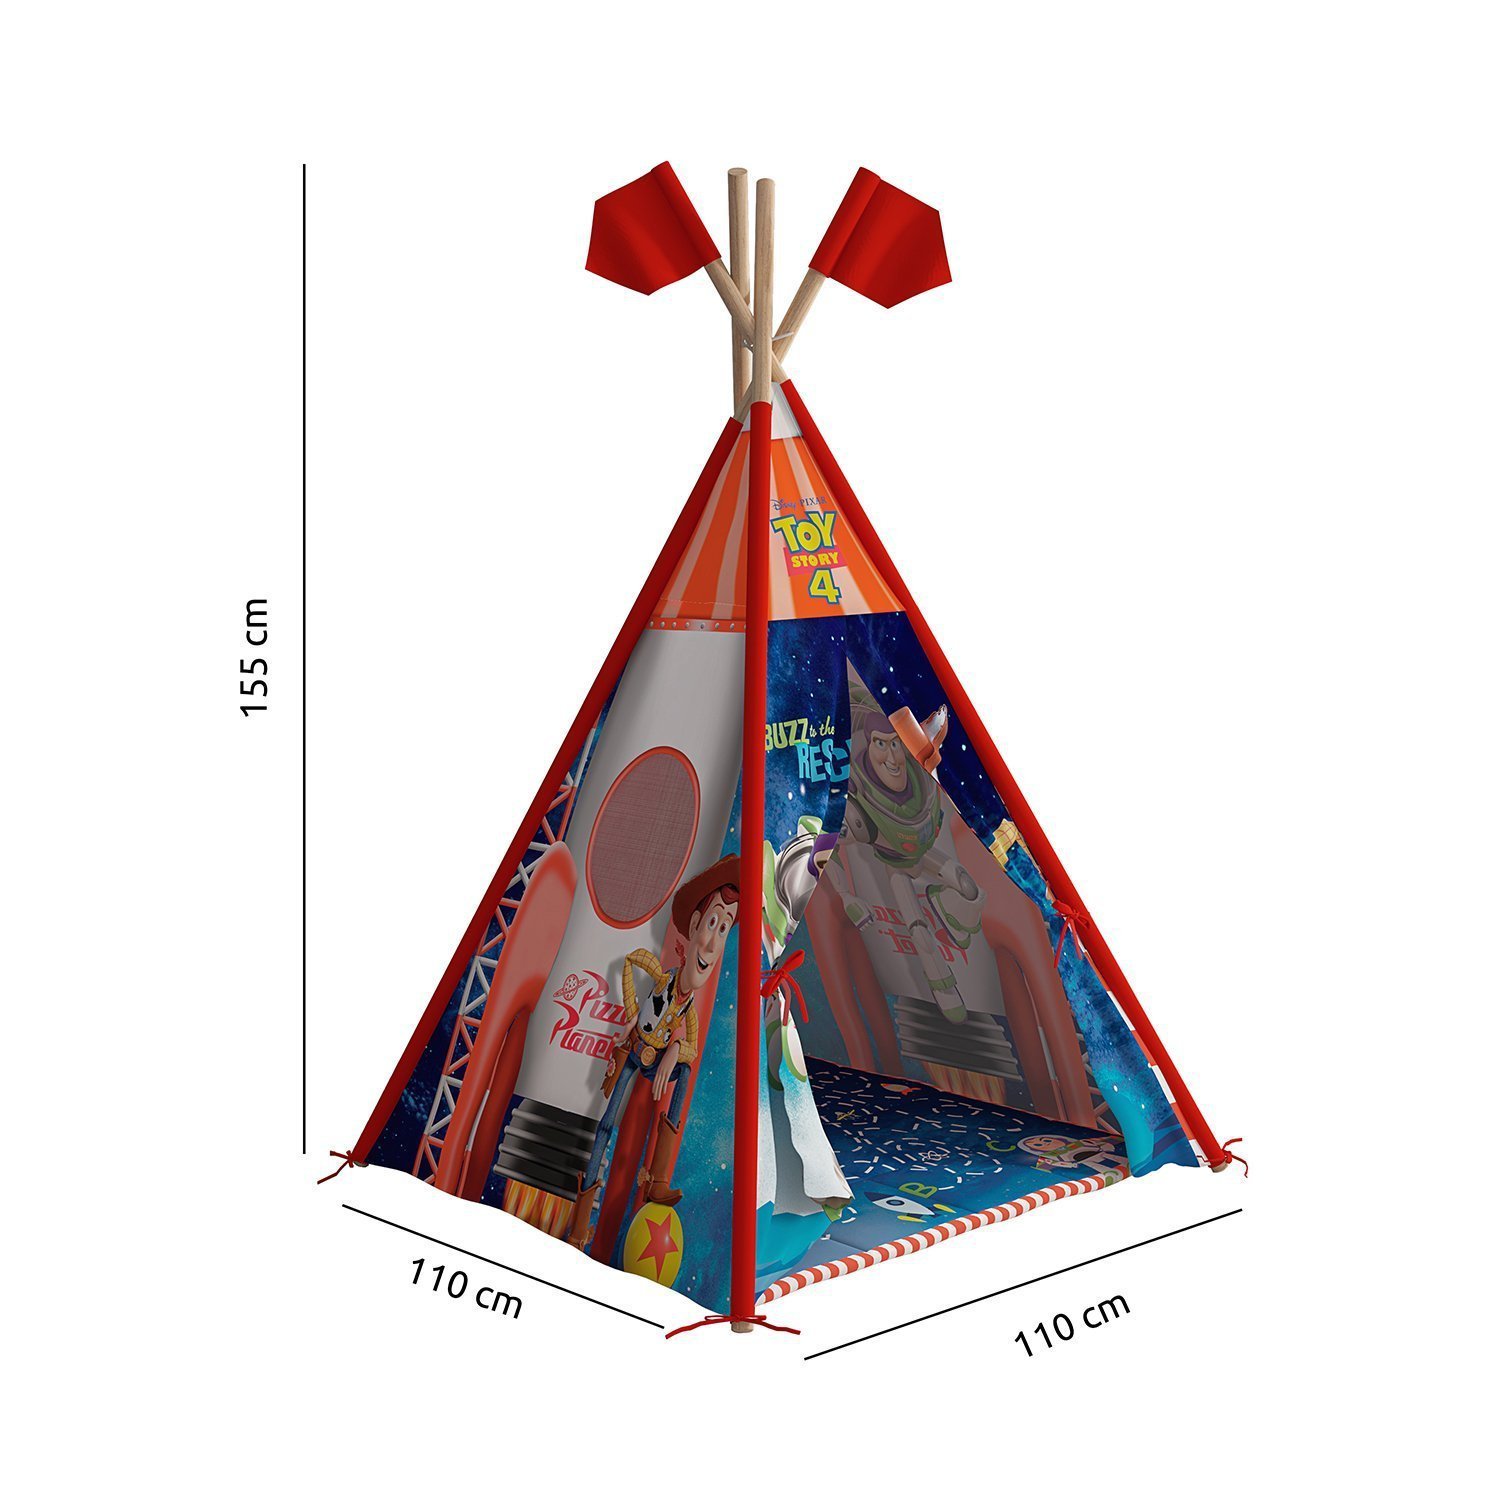 Cabana Tenda Infantil Toy Story Disney Pura Magia - 4